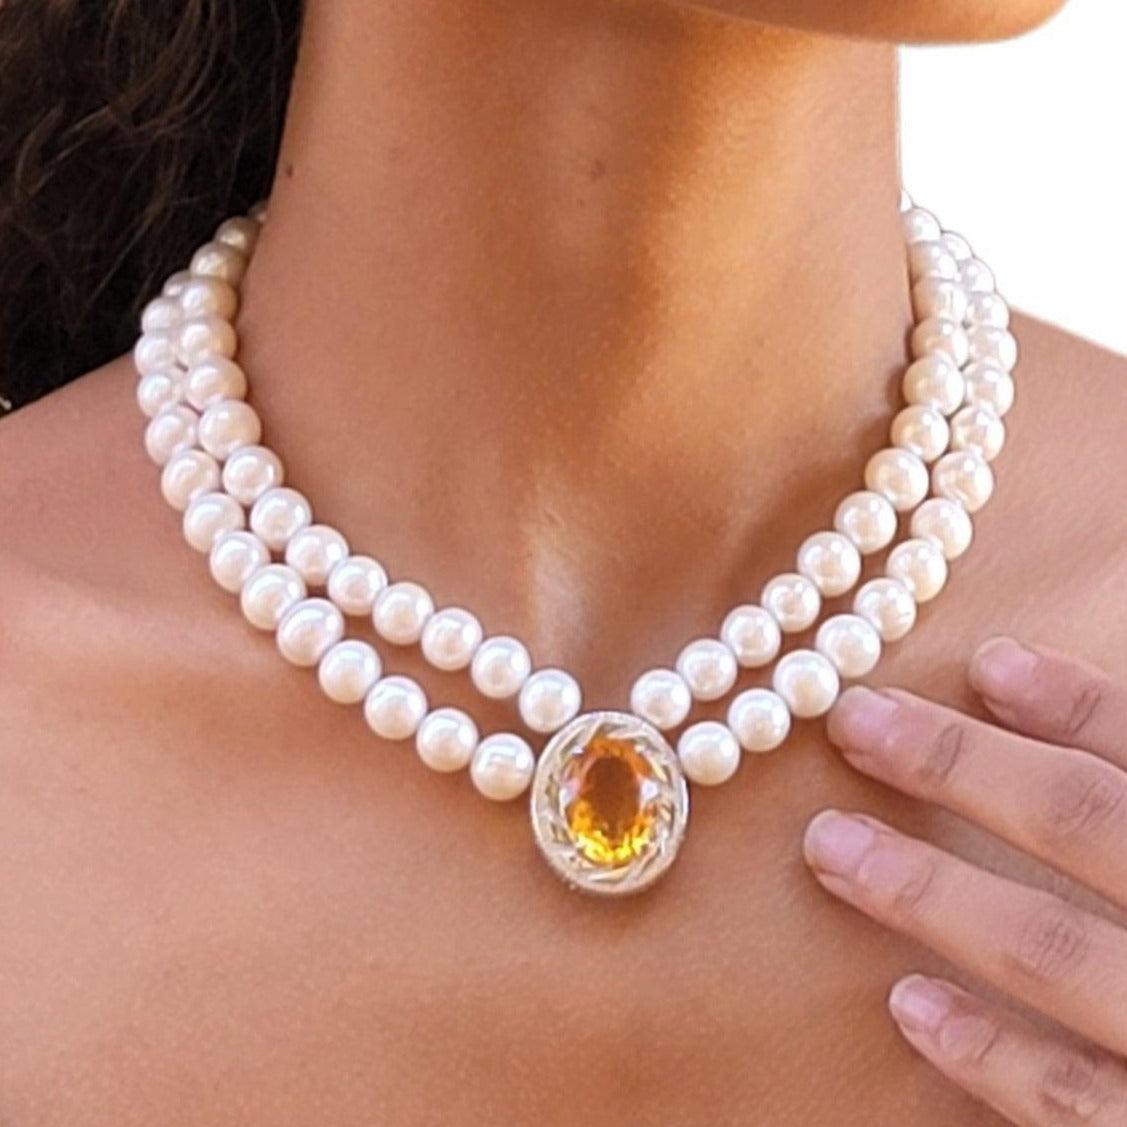 Genuine Citrine and Pearl Necklace - Uniquelan Jewelry